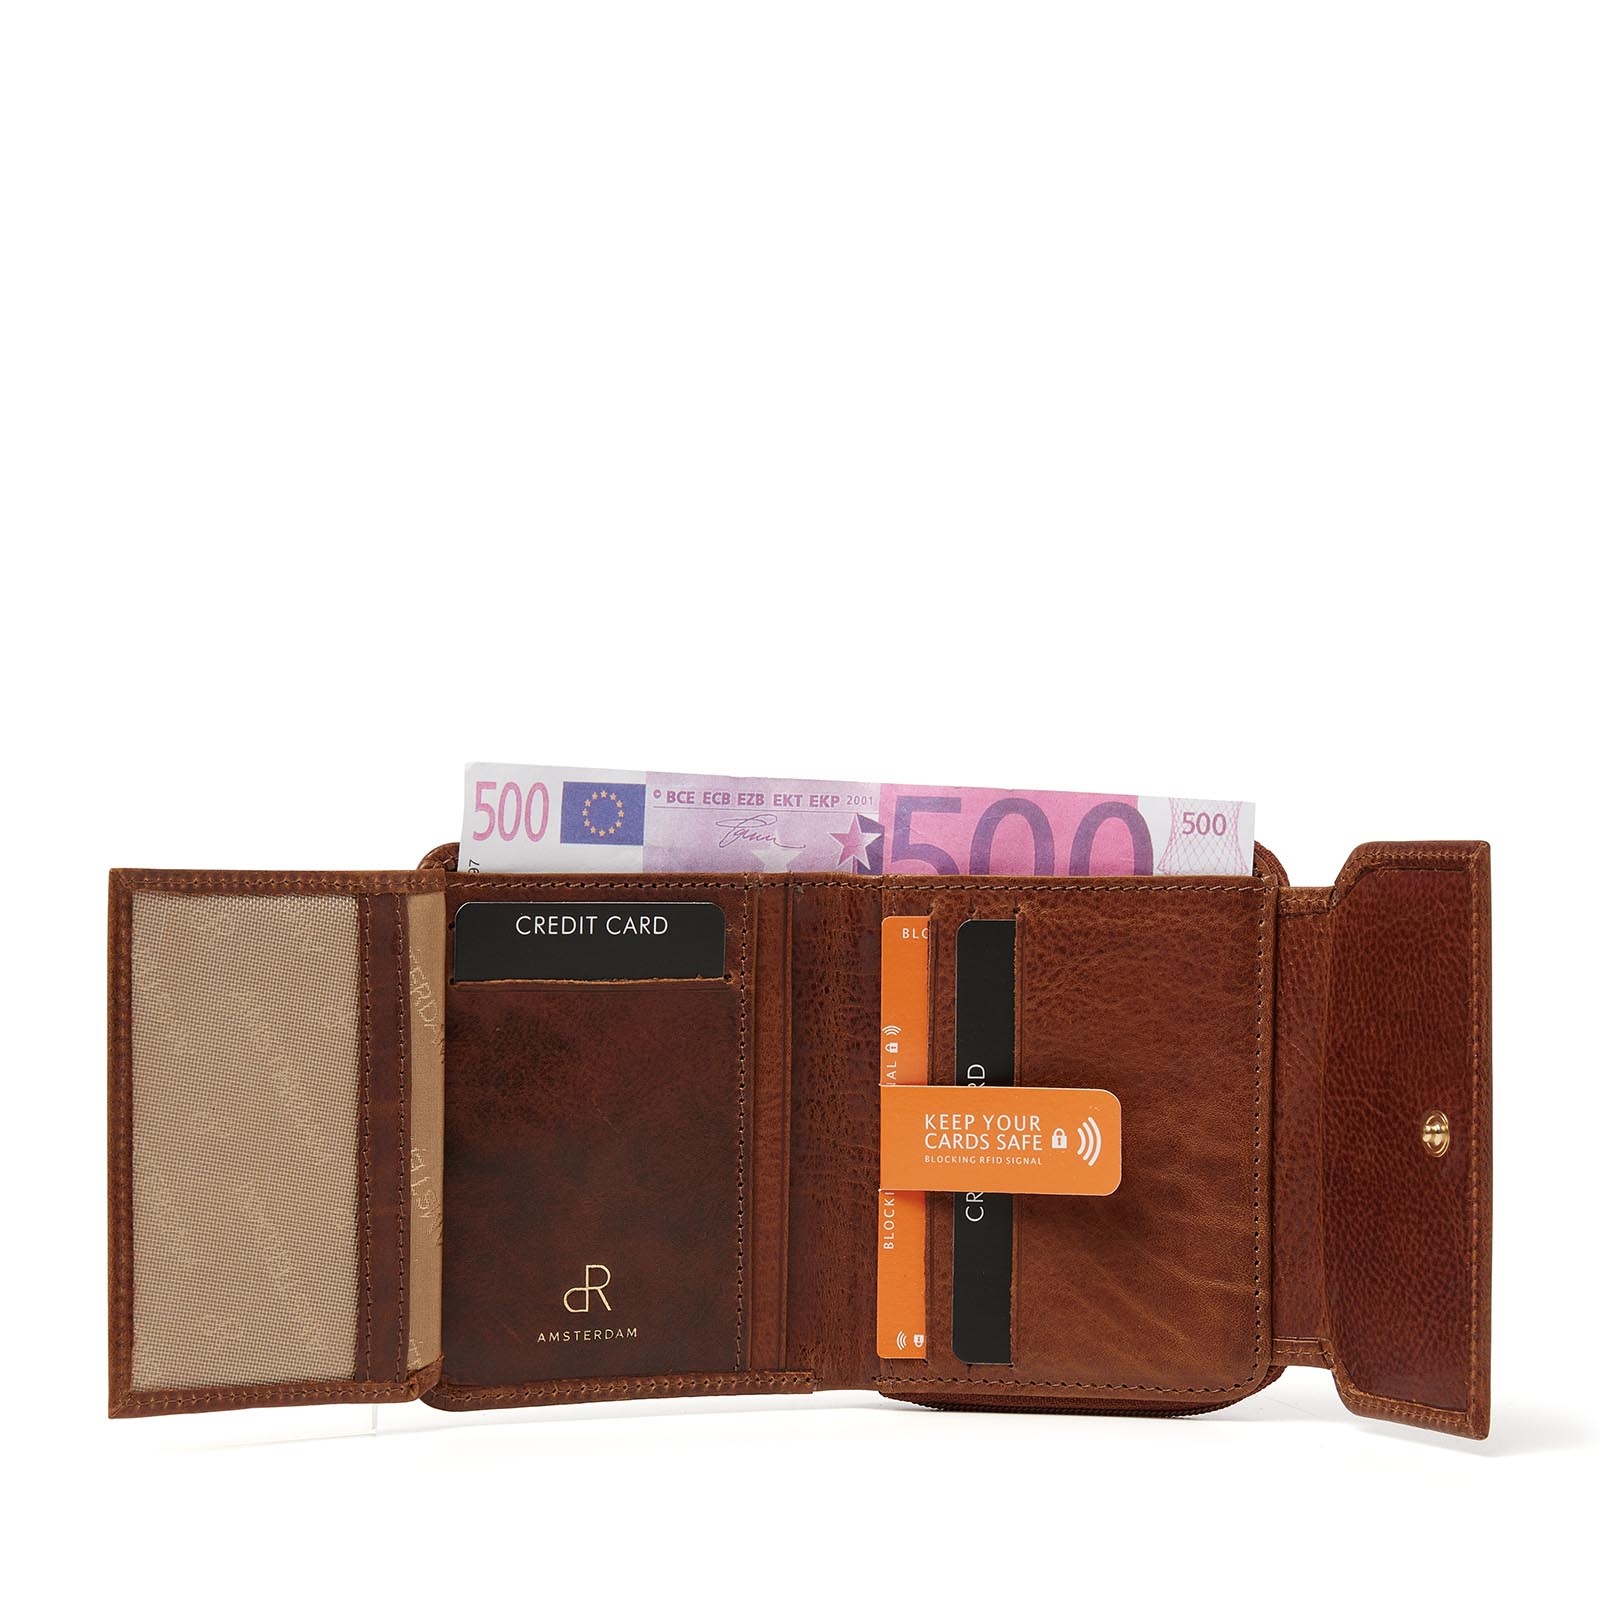 H.J. de Rooy De Rooy  Amsterdam dames portemonnee 28179 - bruin - cognac